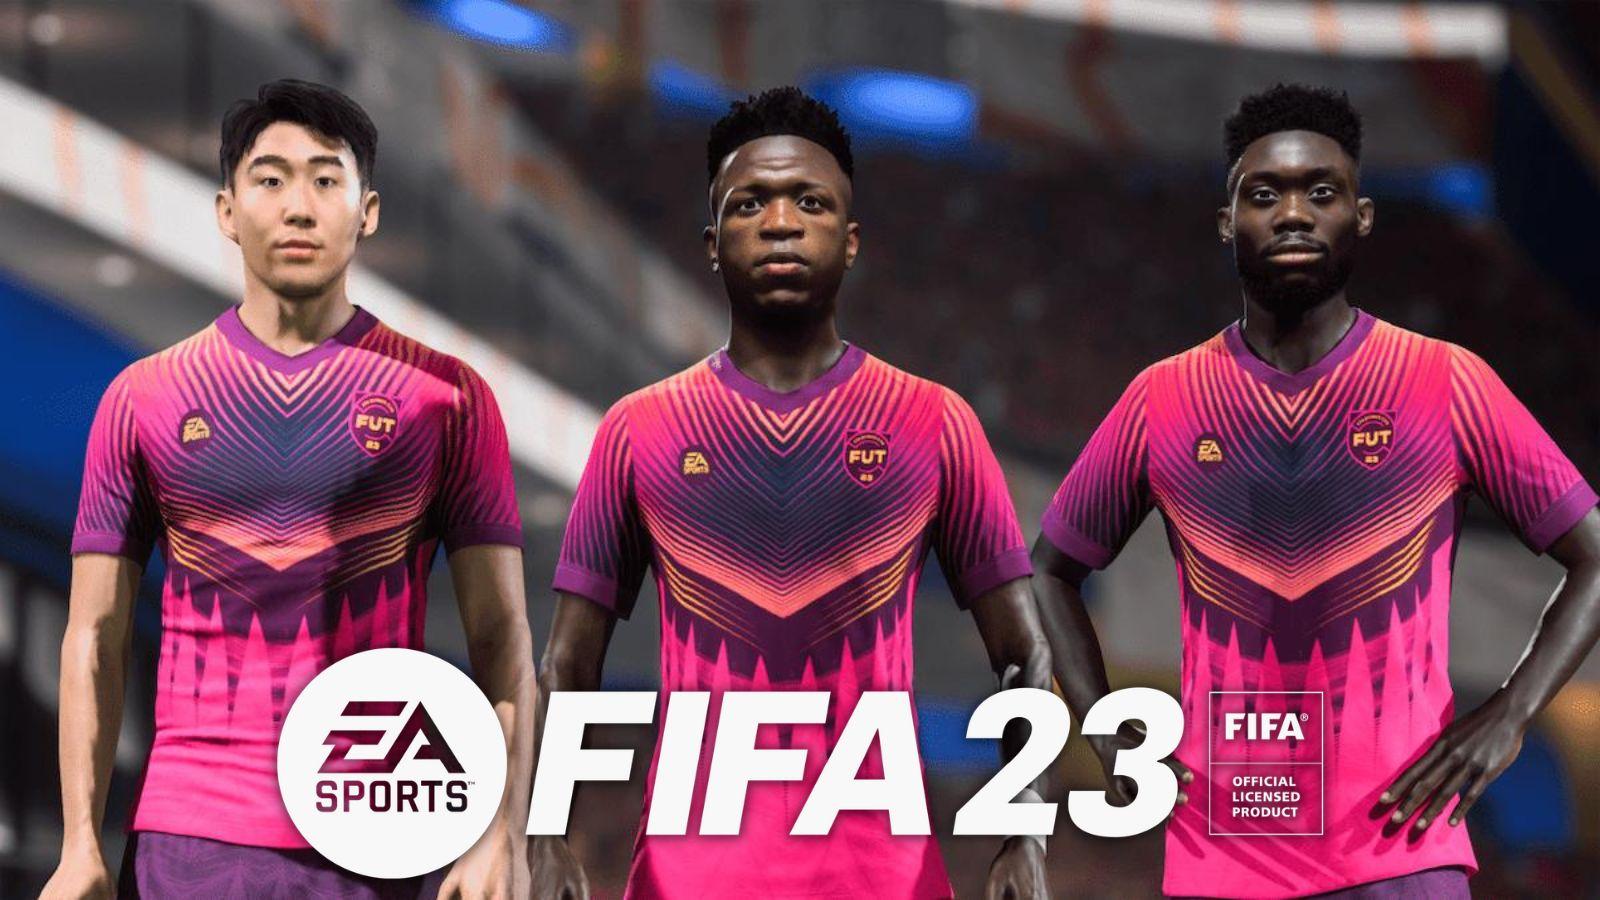 FIFA 23 players in FUT kit